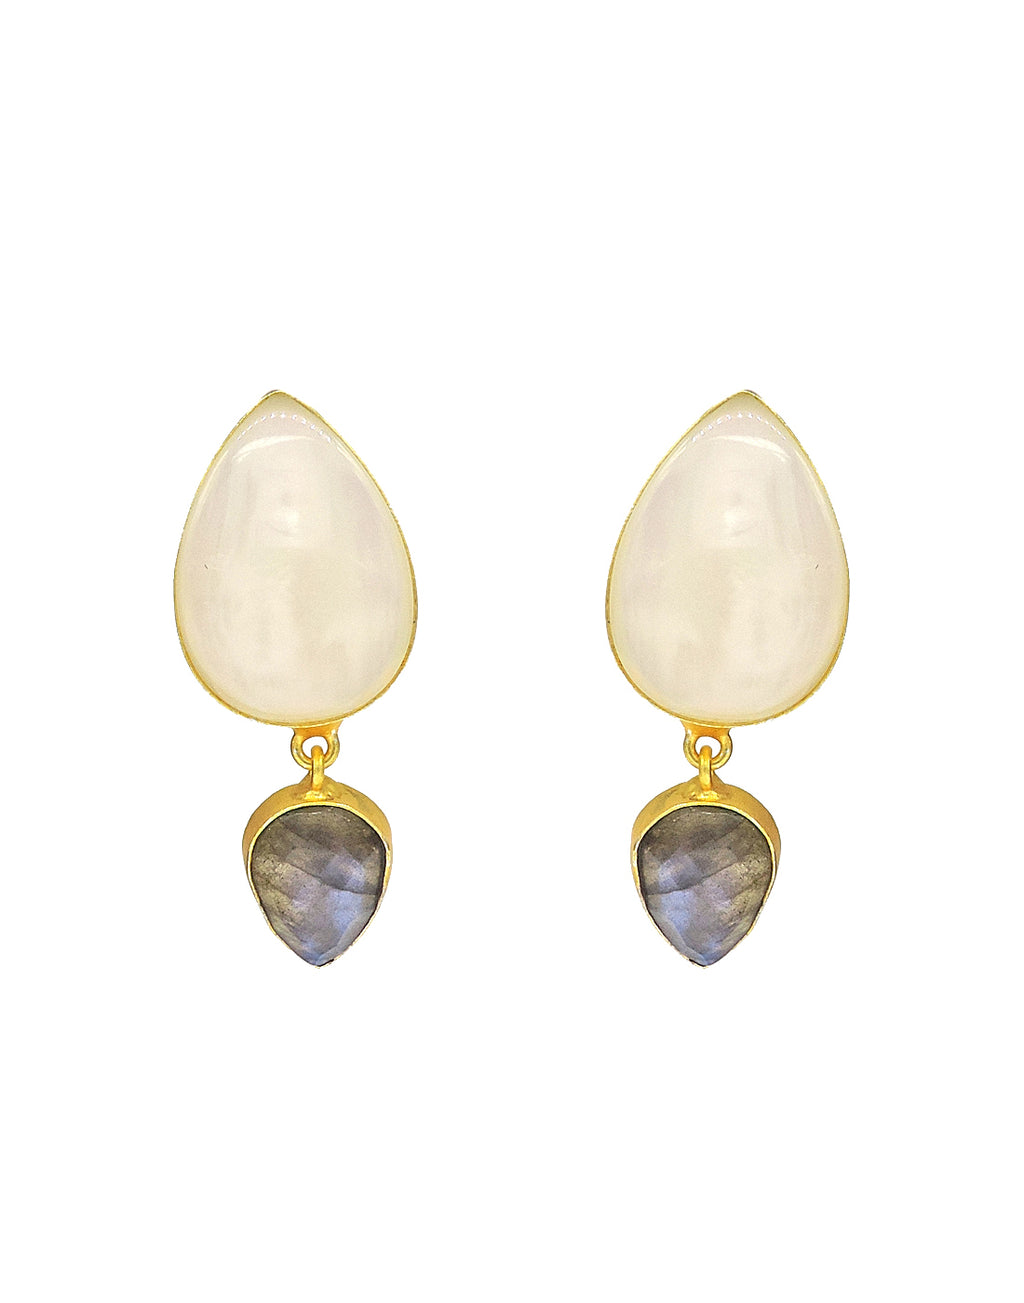 Shell Drop Earrings - Statement Earrings - Gold-Plated & Hypoallergenic Jewellery - Made in India - Dubai Jewellery - Dori